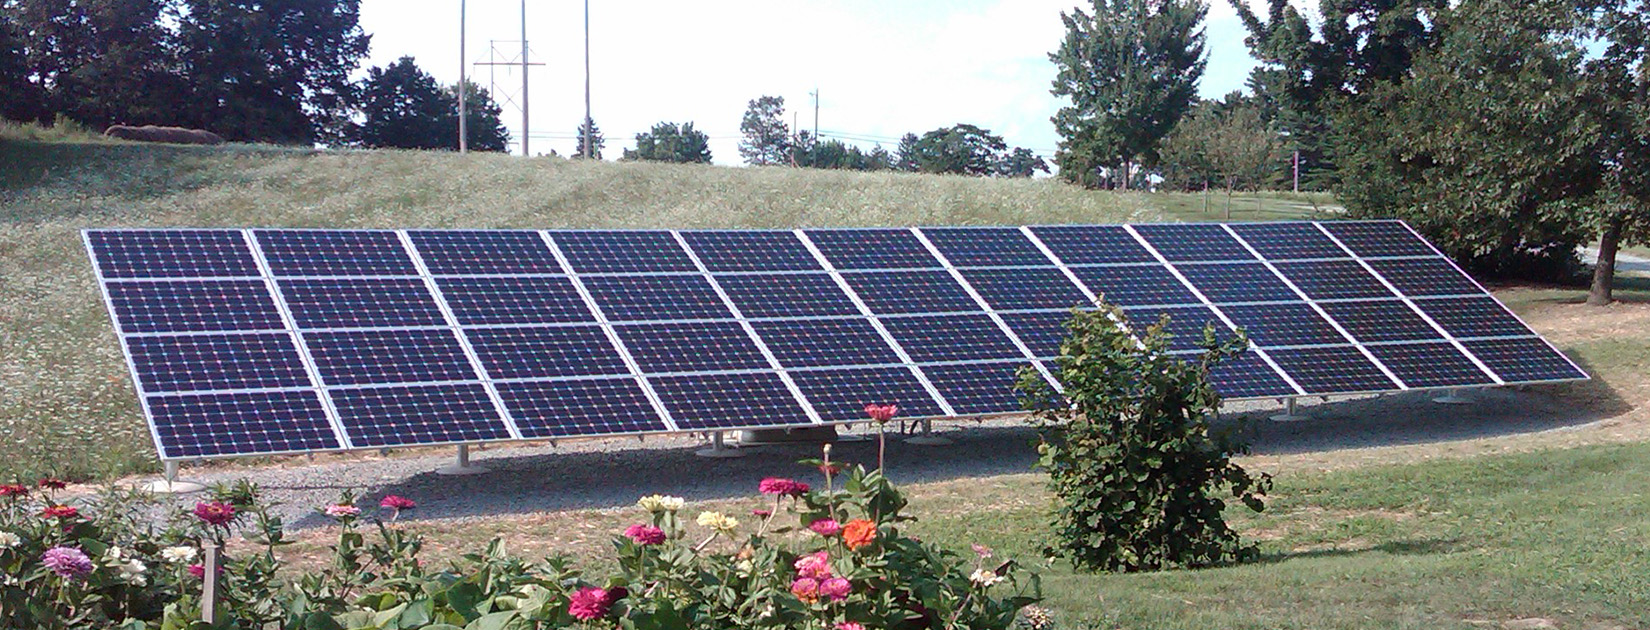 ground solar panels pittsburgh pa